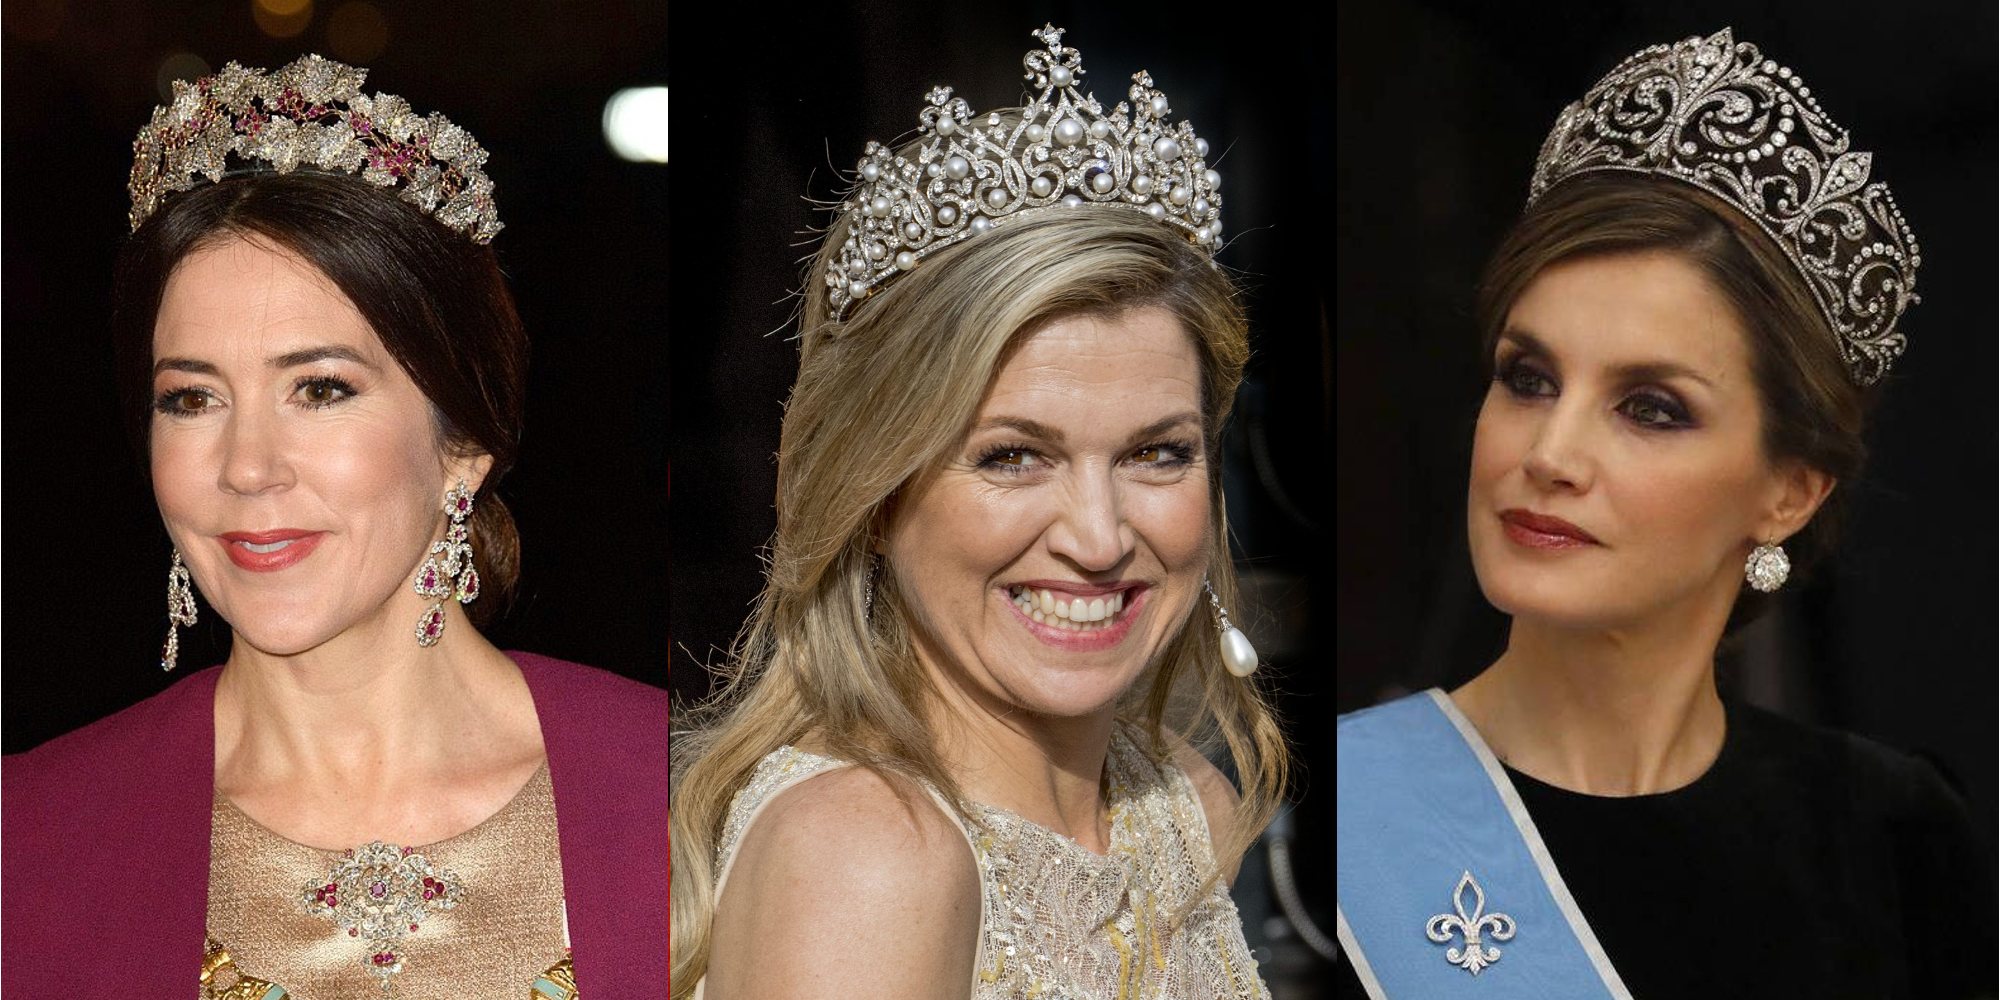 Las 10 tiaras más impresionantes de la realeza europea: de España a Dinamarca pasando por Holanda